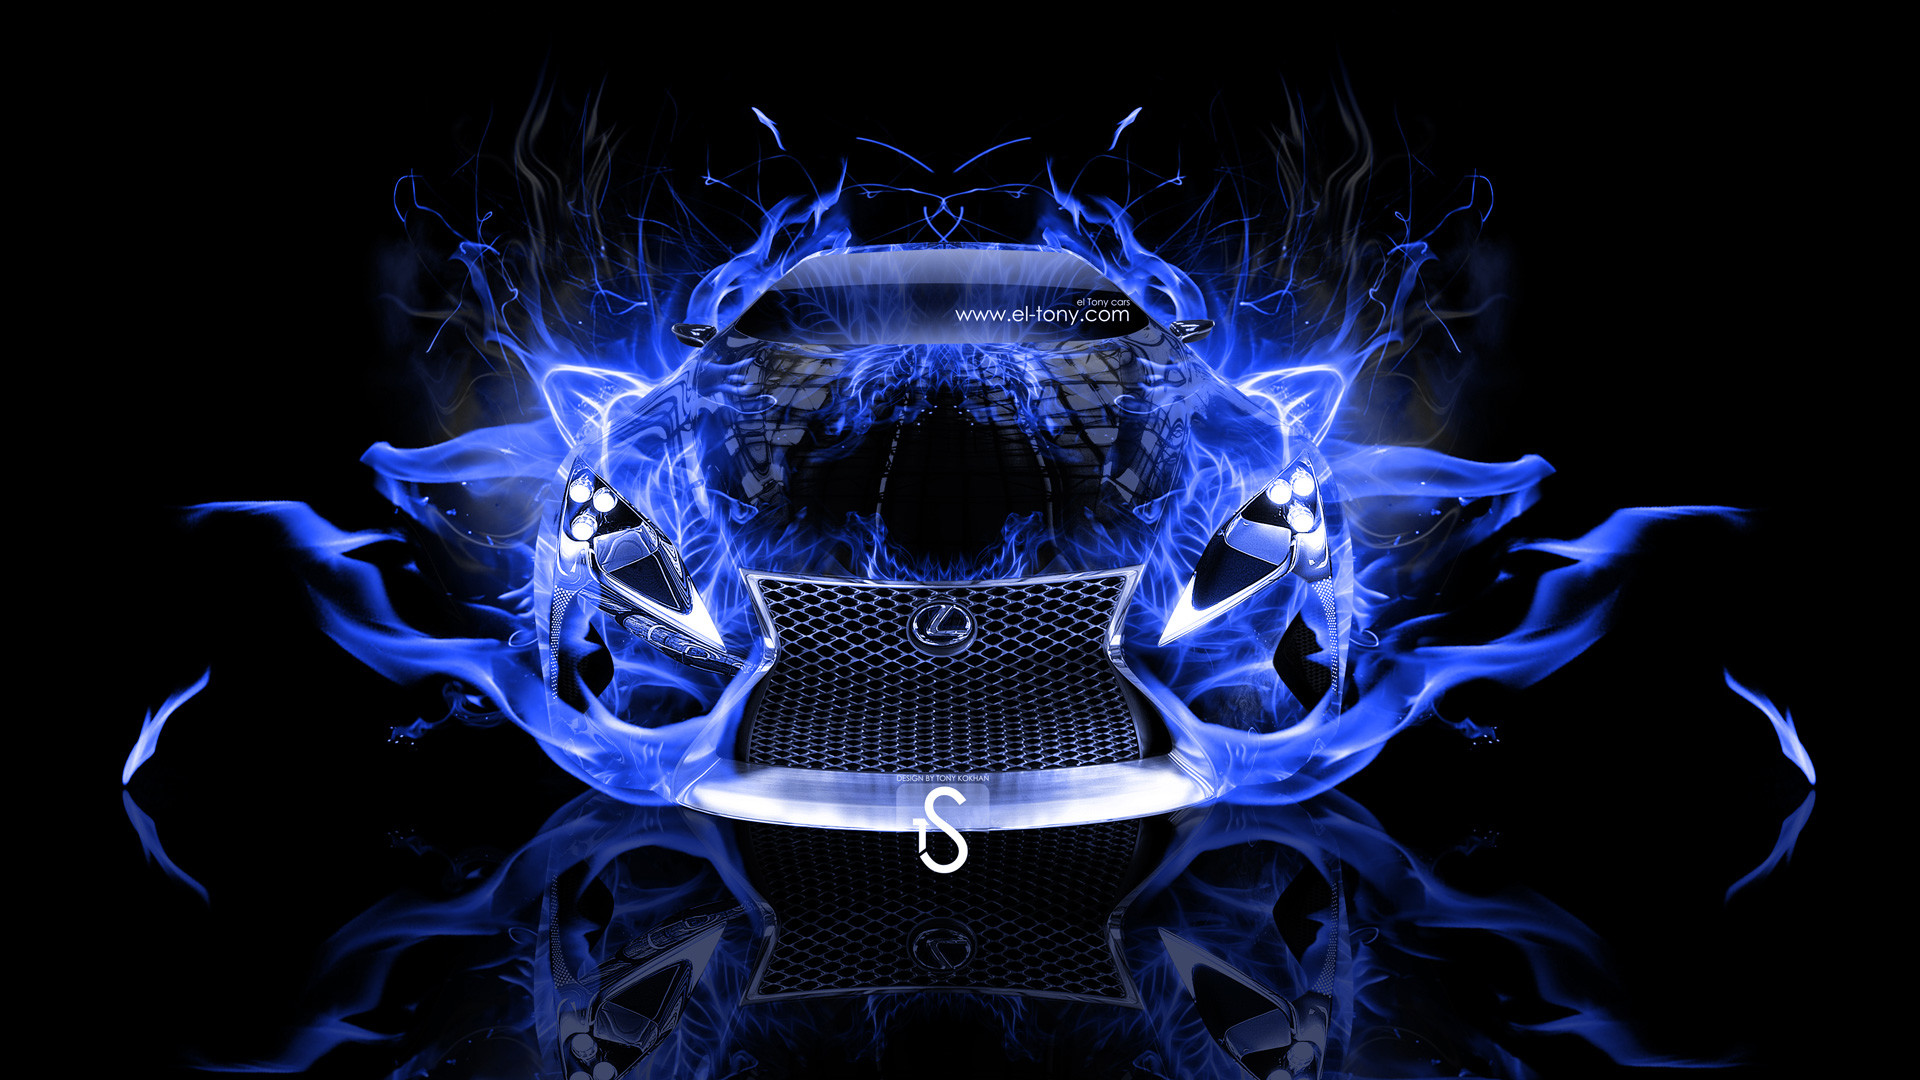 1920x1080 Lexus-LF-LC-Blue-Fire-Abstract-Car-2013-